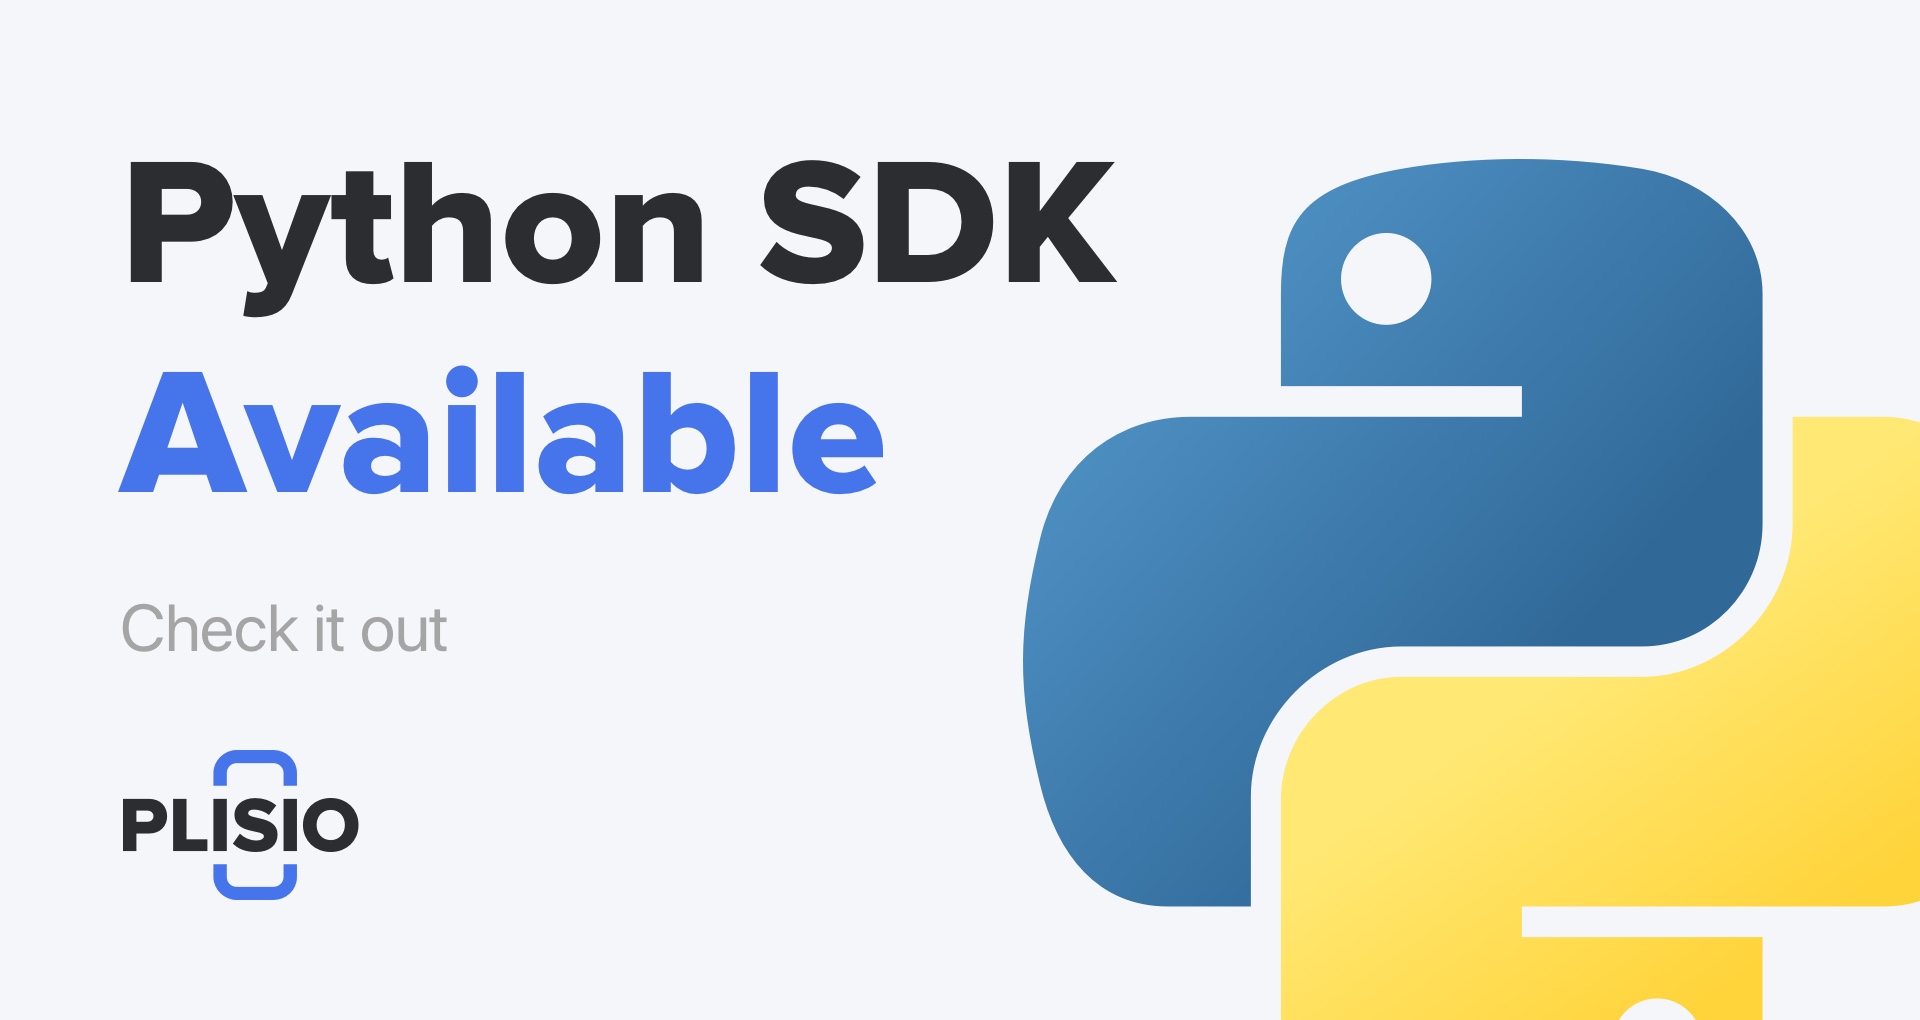 Python SDK ya está disponible. ¡Échale un vistazo!